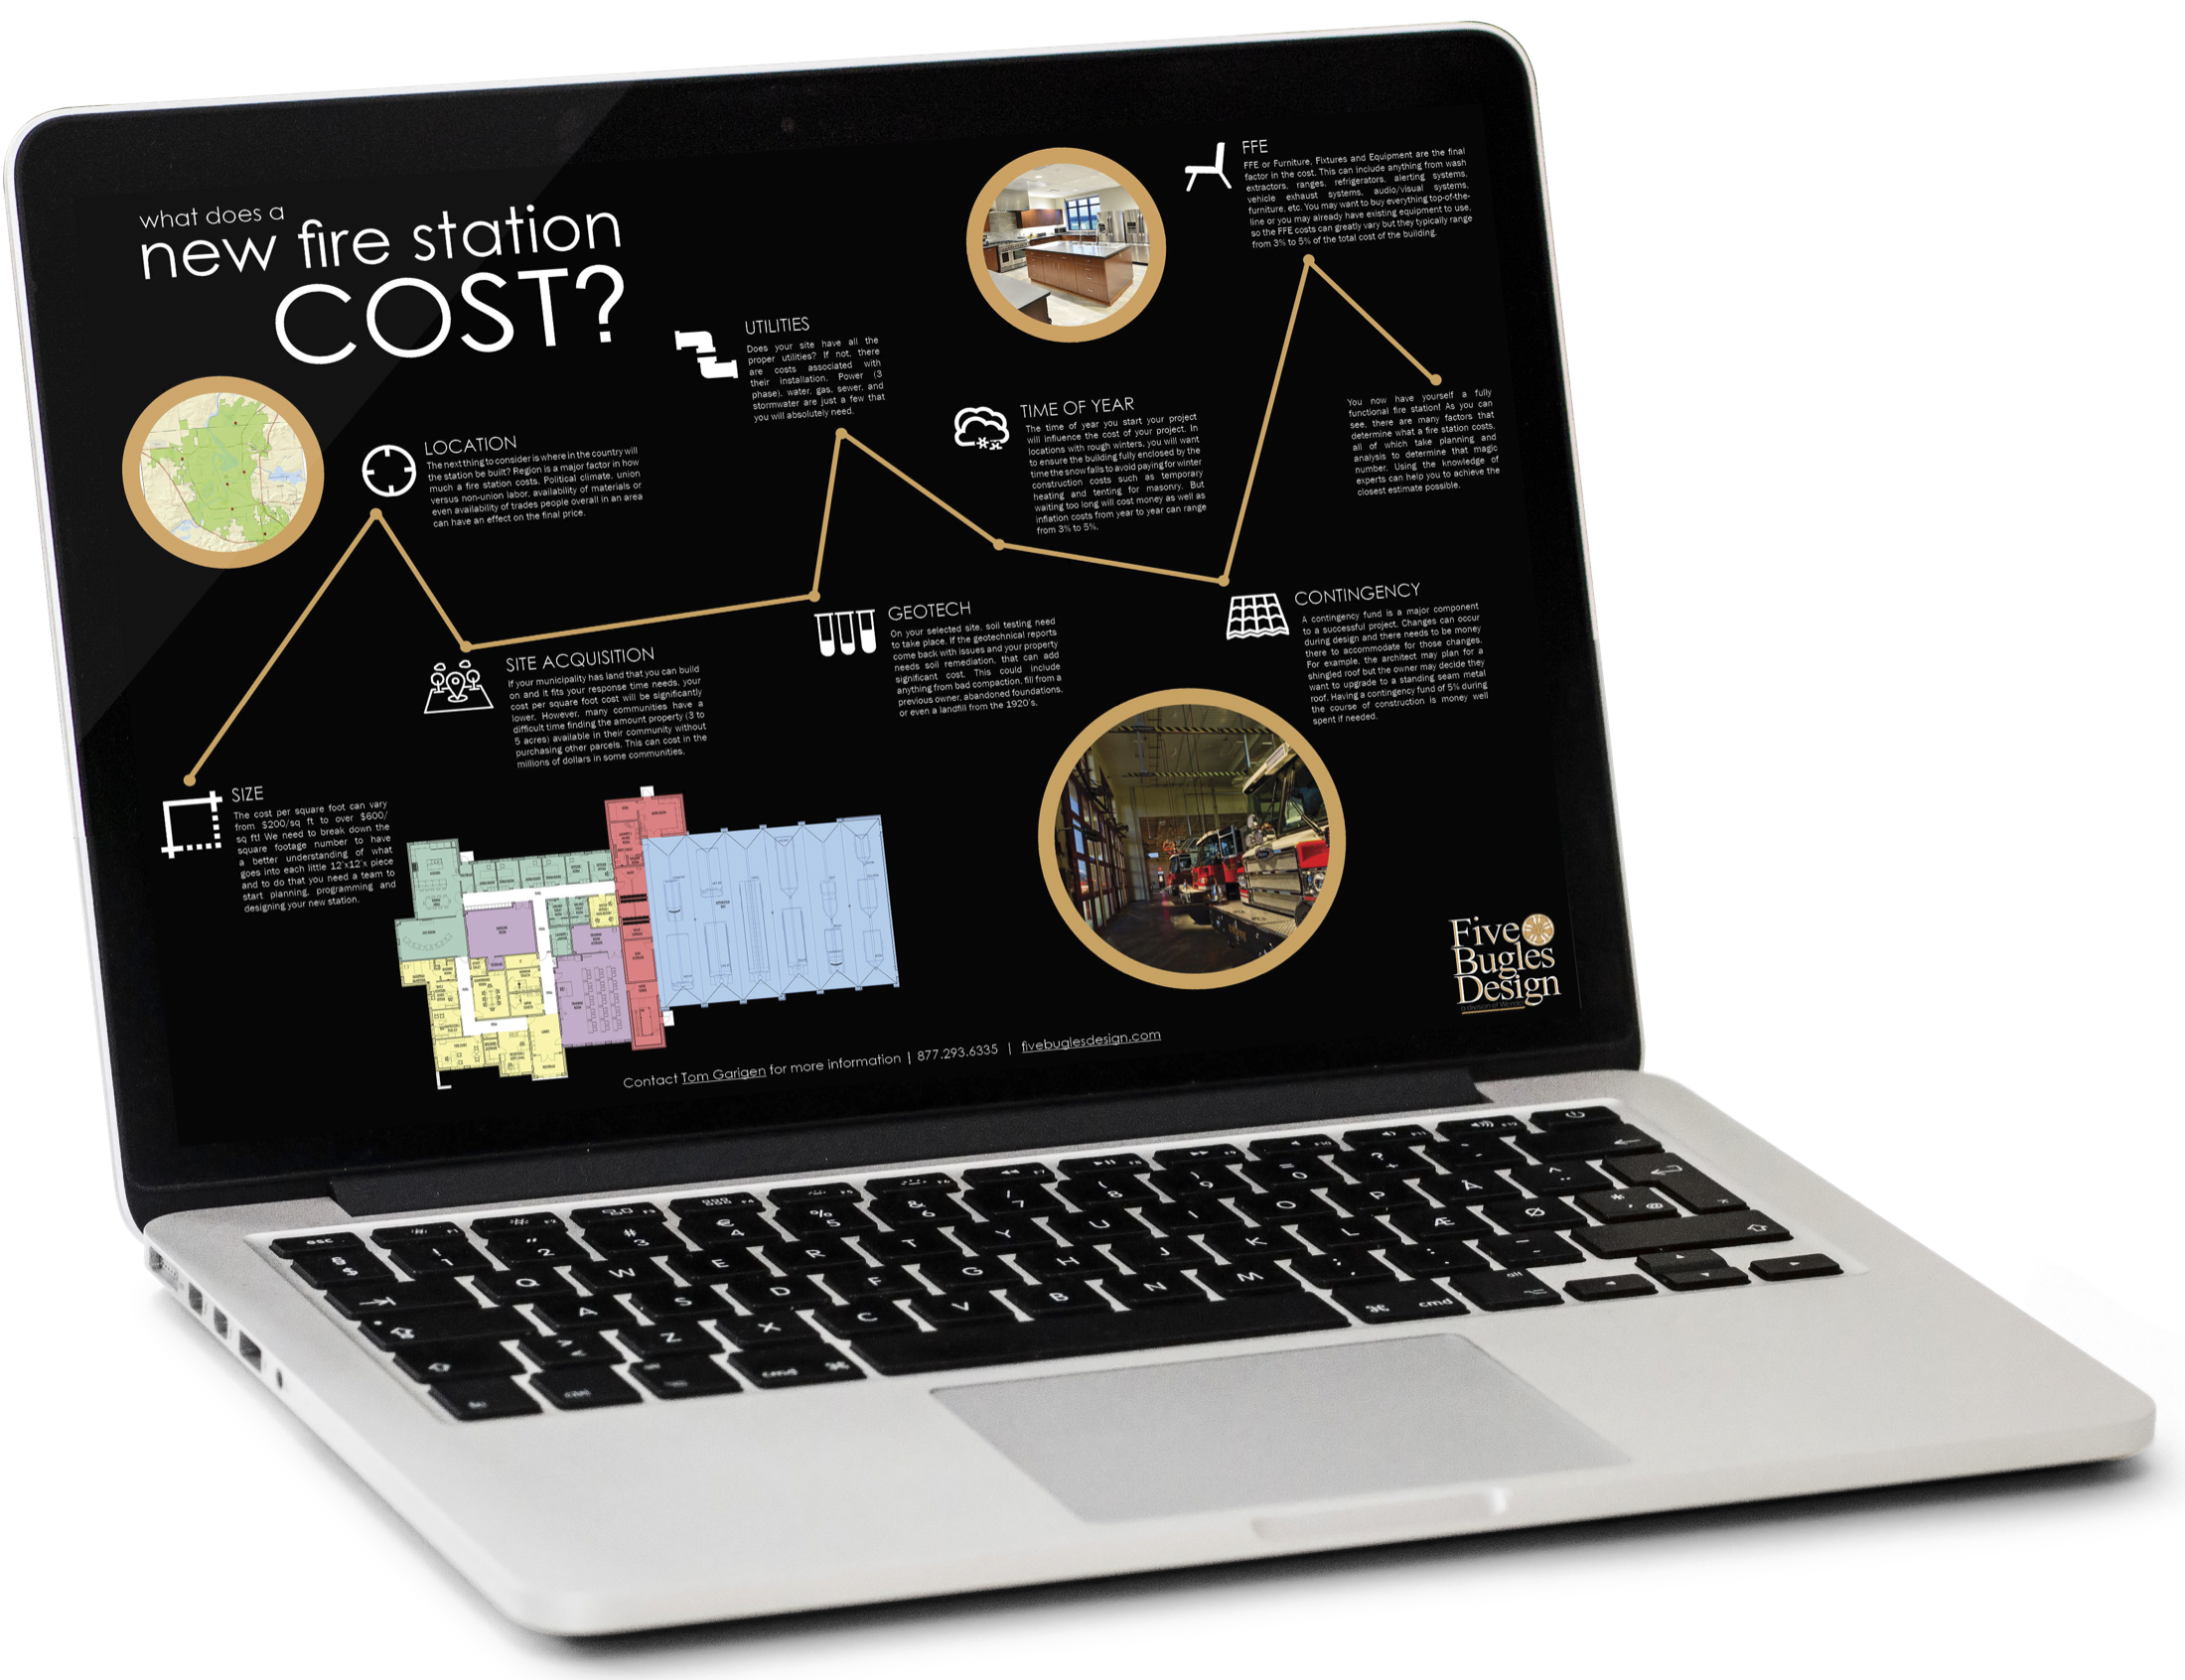 Download Macbook Mockup - New Fire Station Cost | Wendel